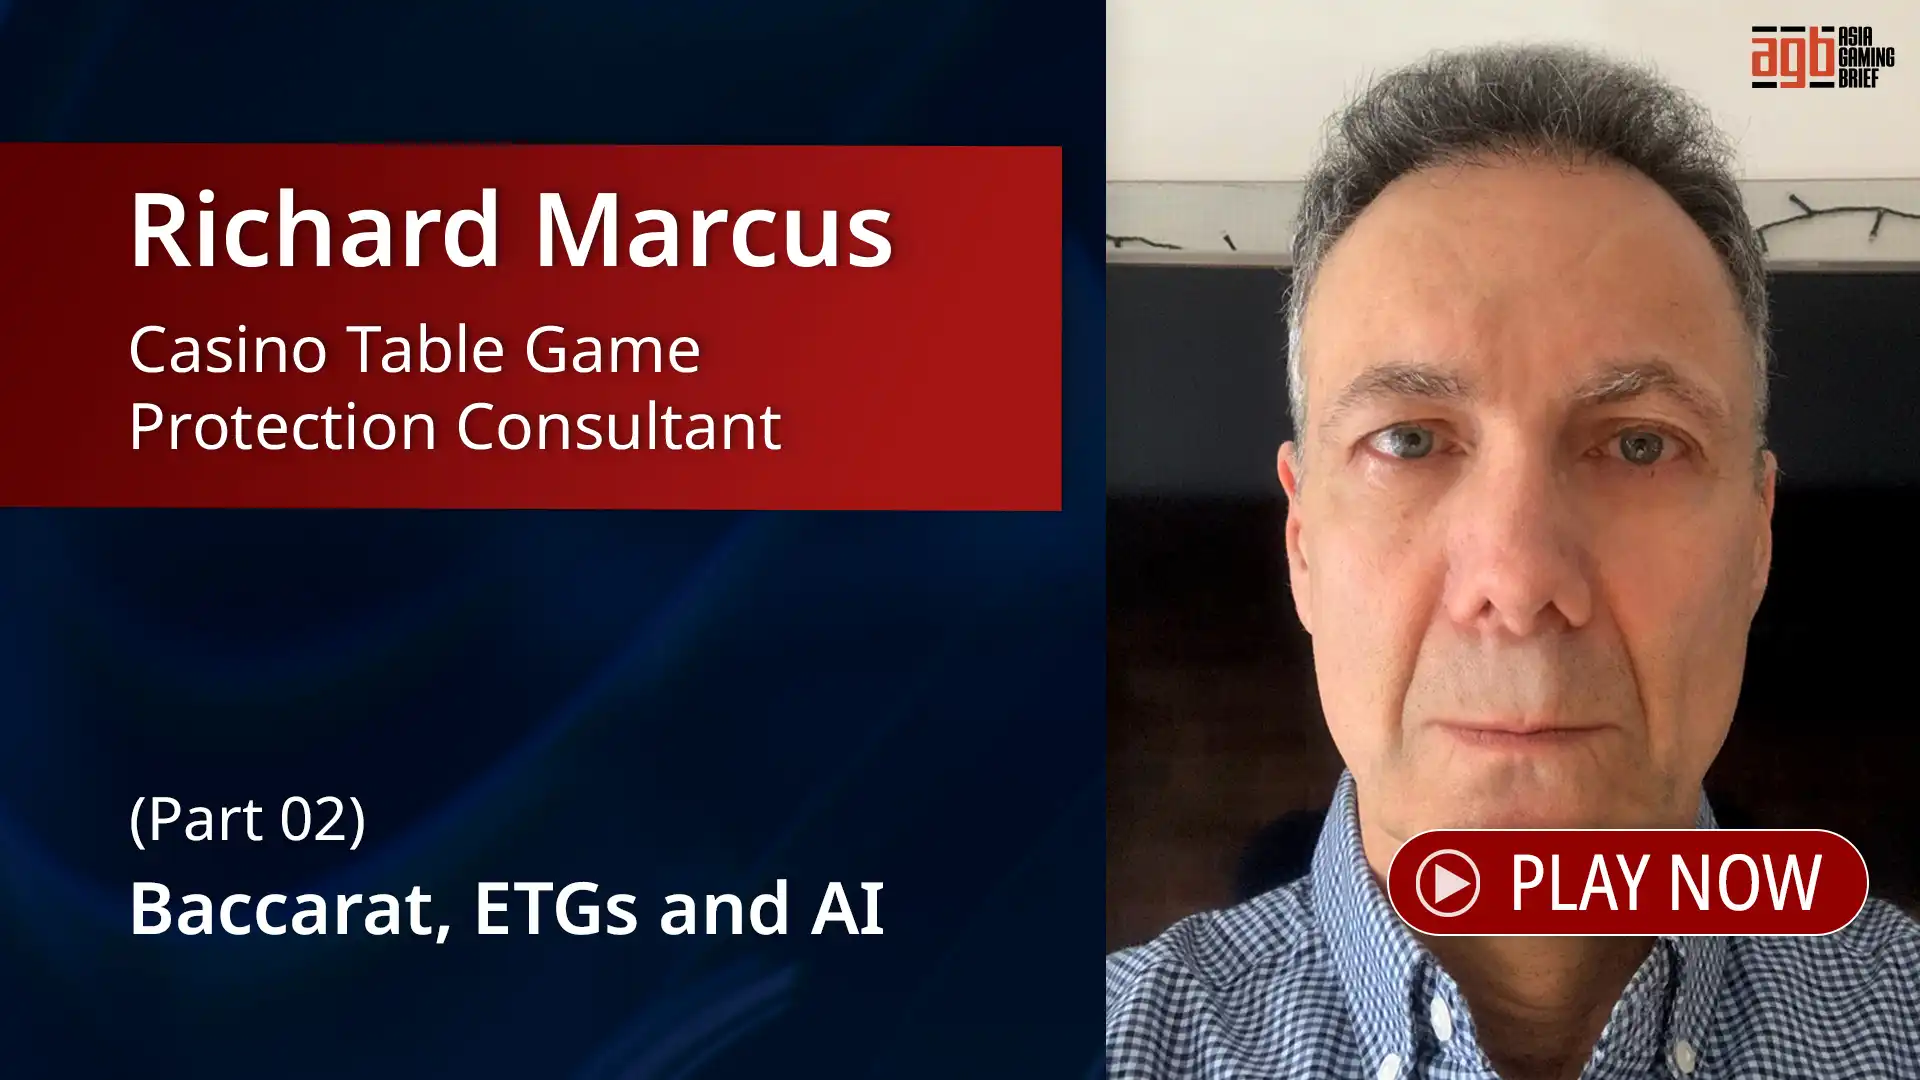 Baccarat, ETGs and AI vulnerabilities: Richard Marcus